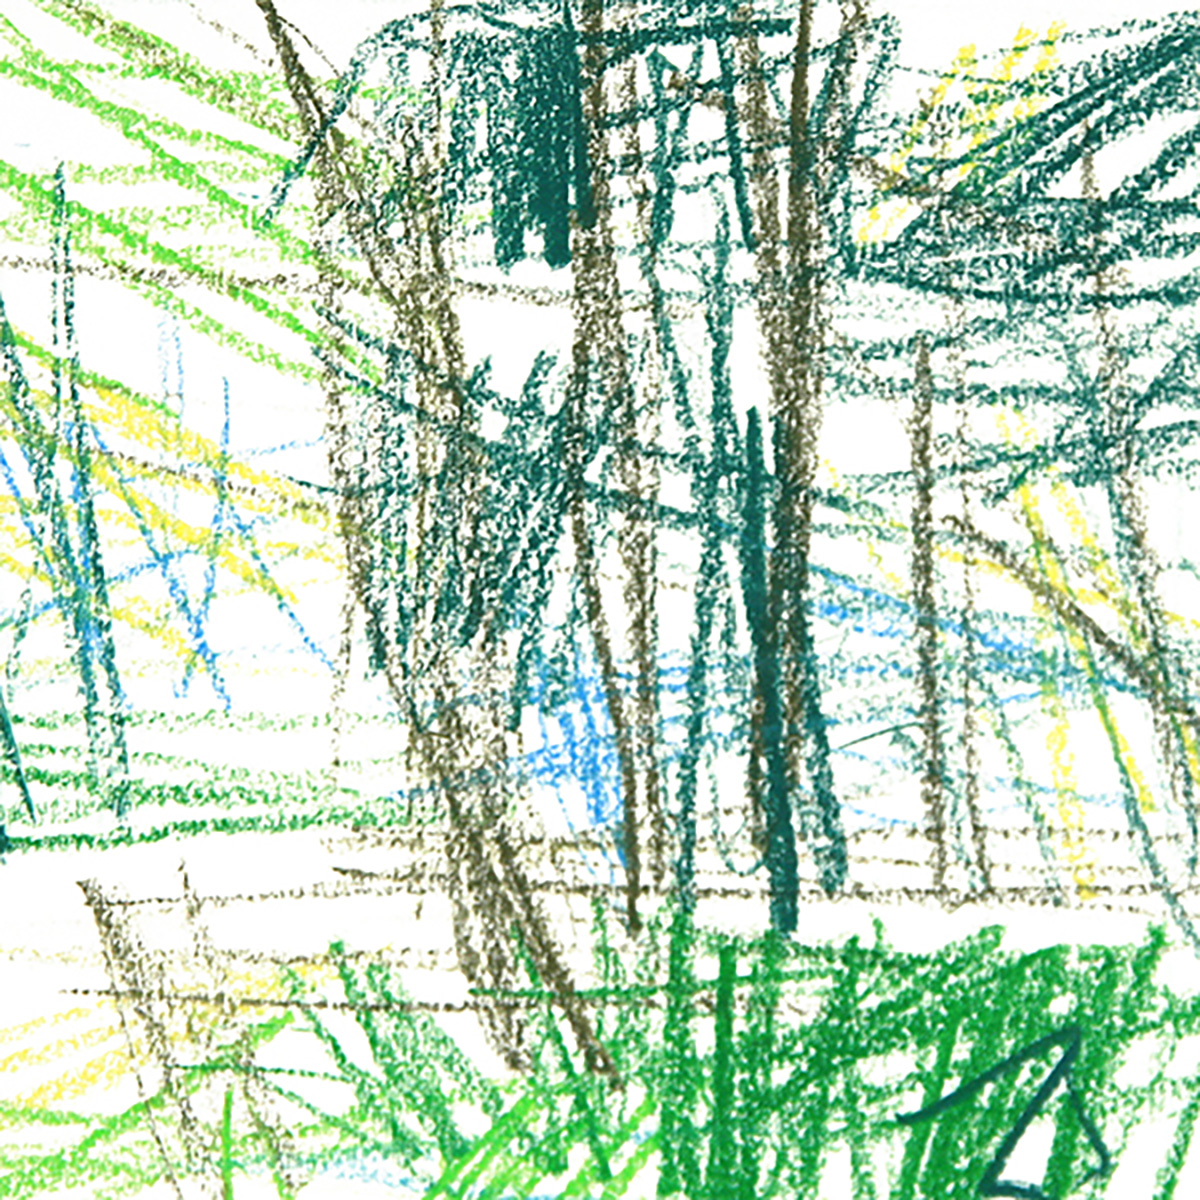 SisiPark BadIschl 1, 201815 x 15 cmCrayon on paper